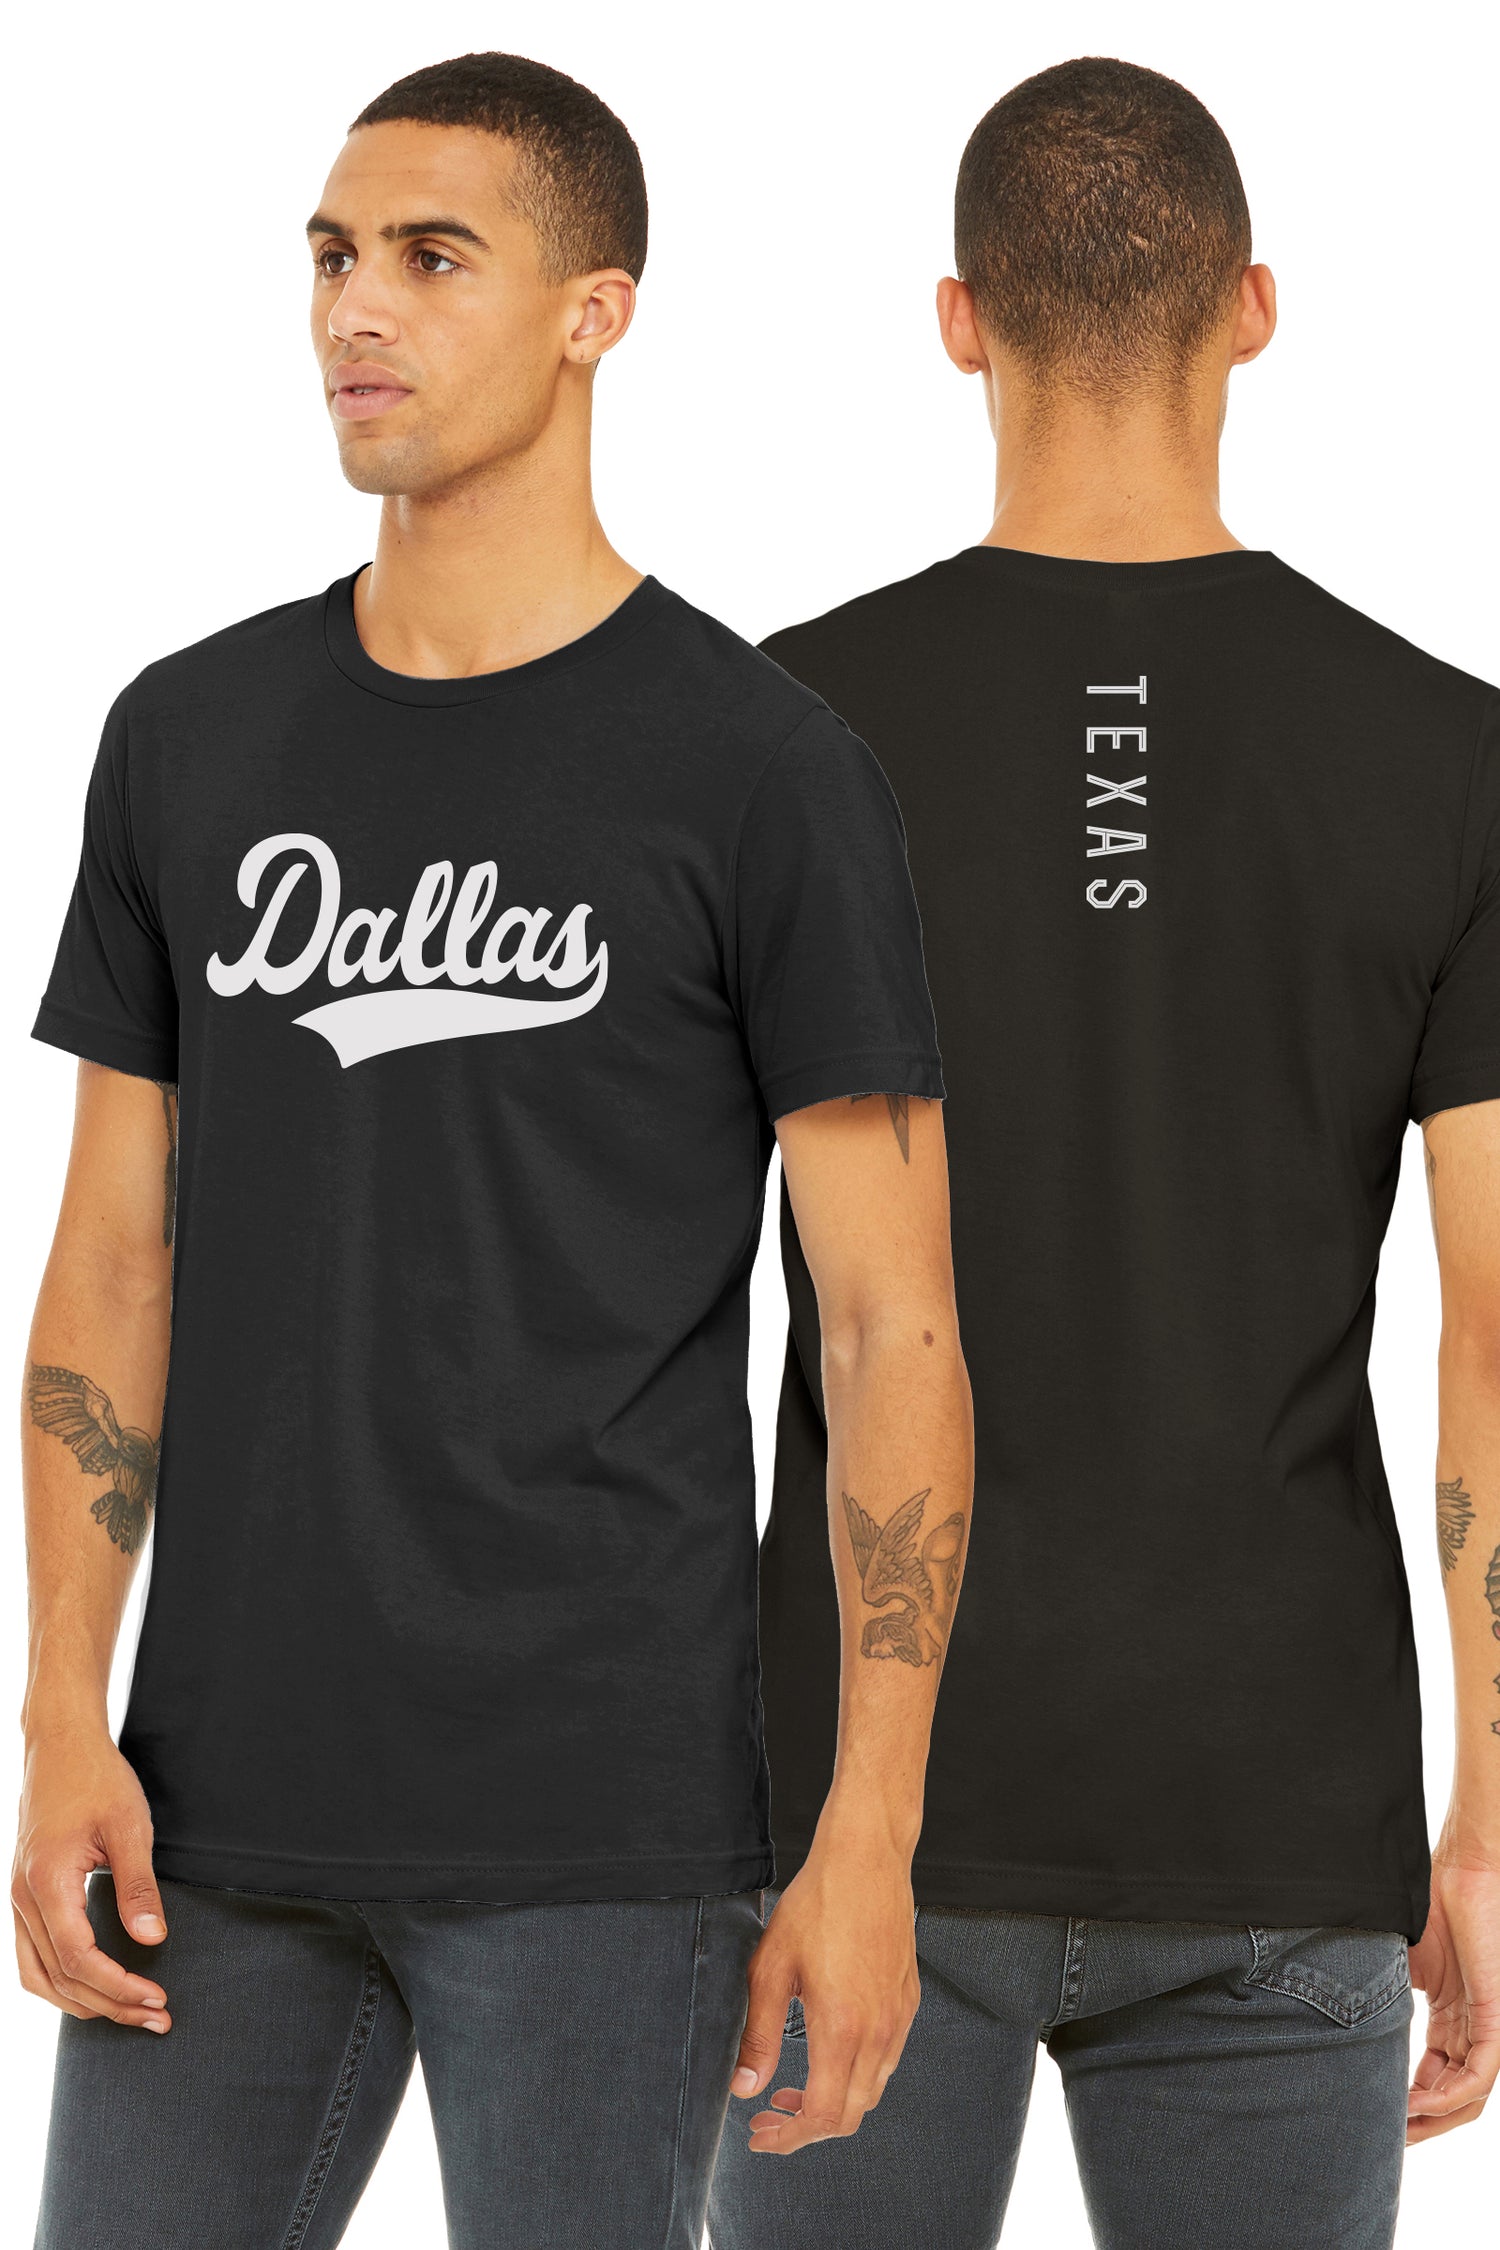 Dallas Clothing